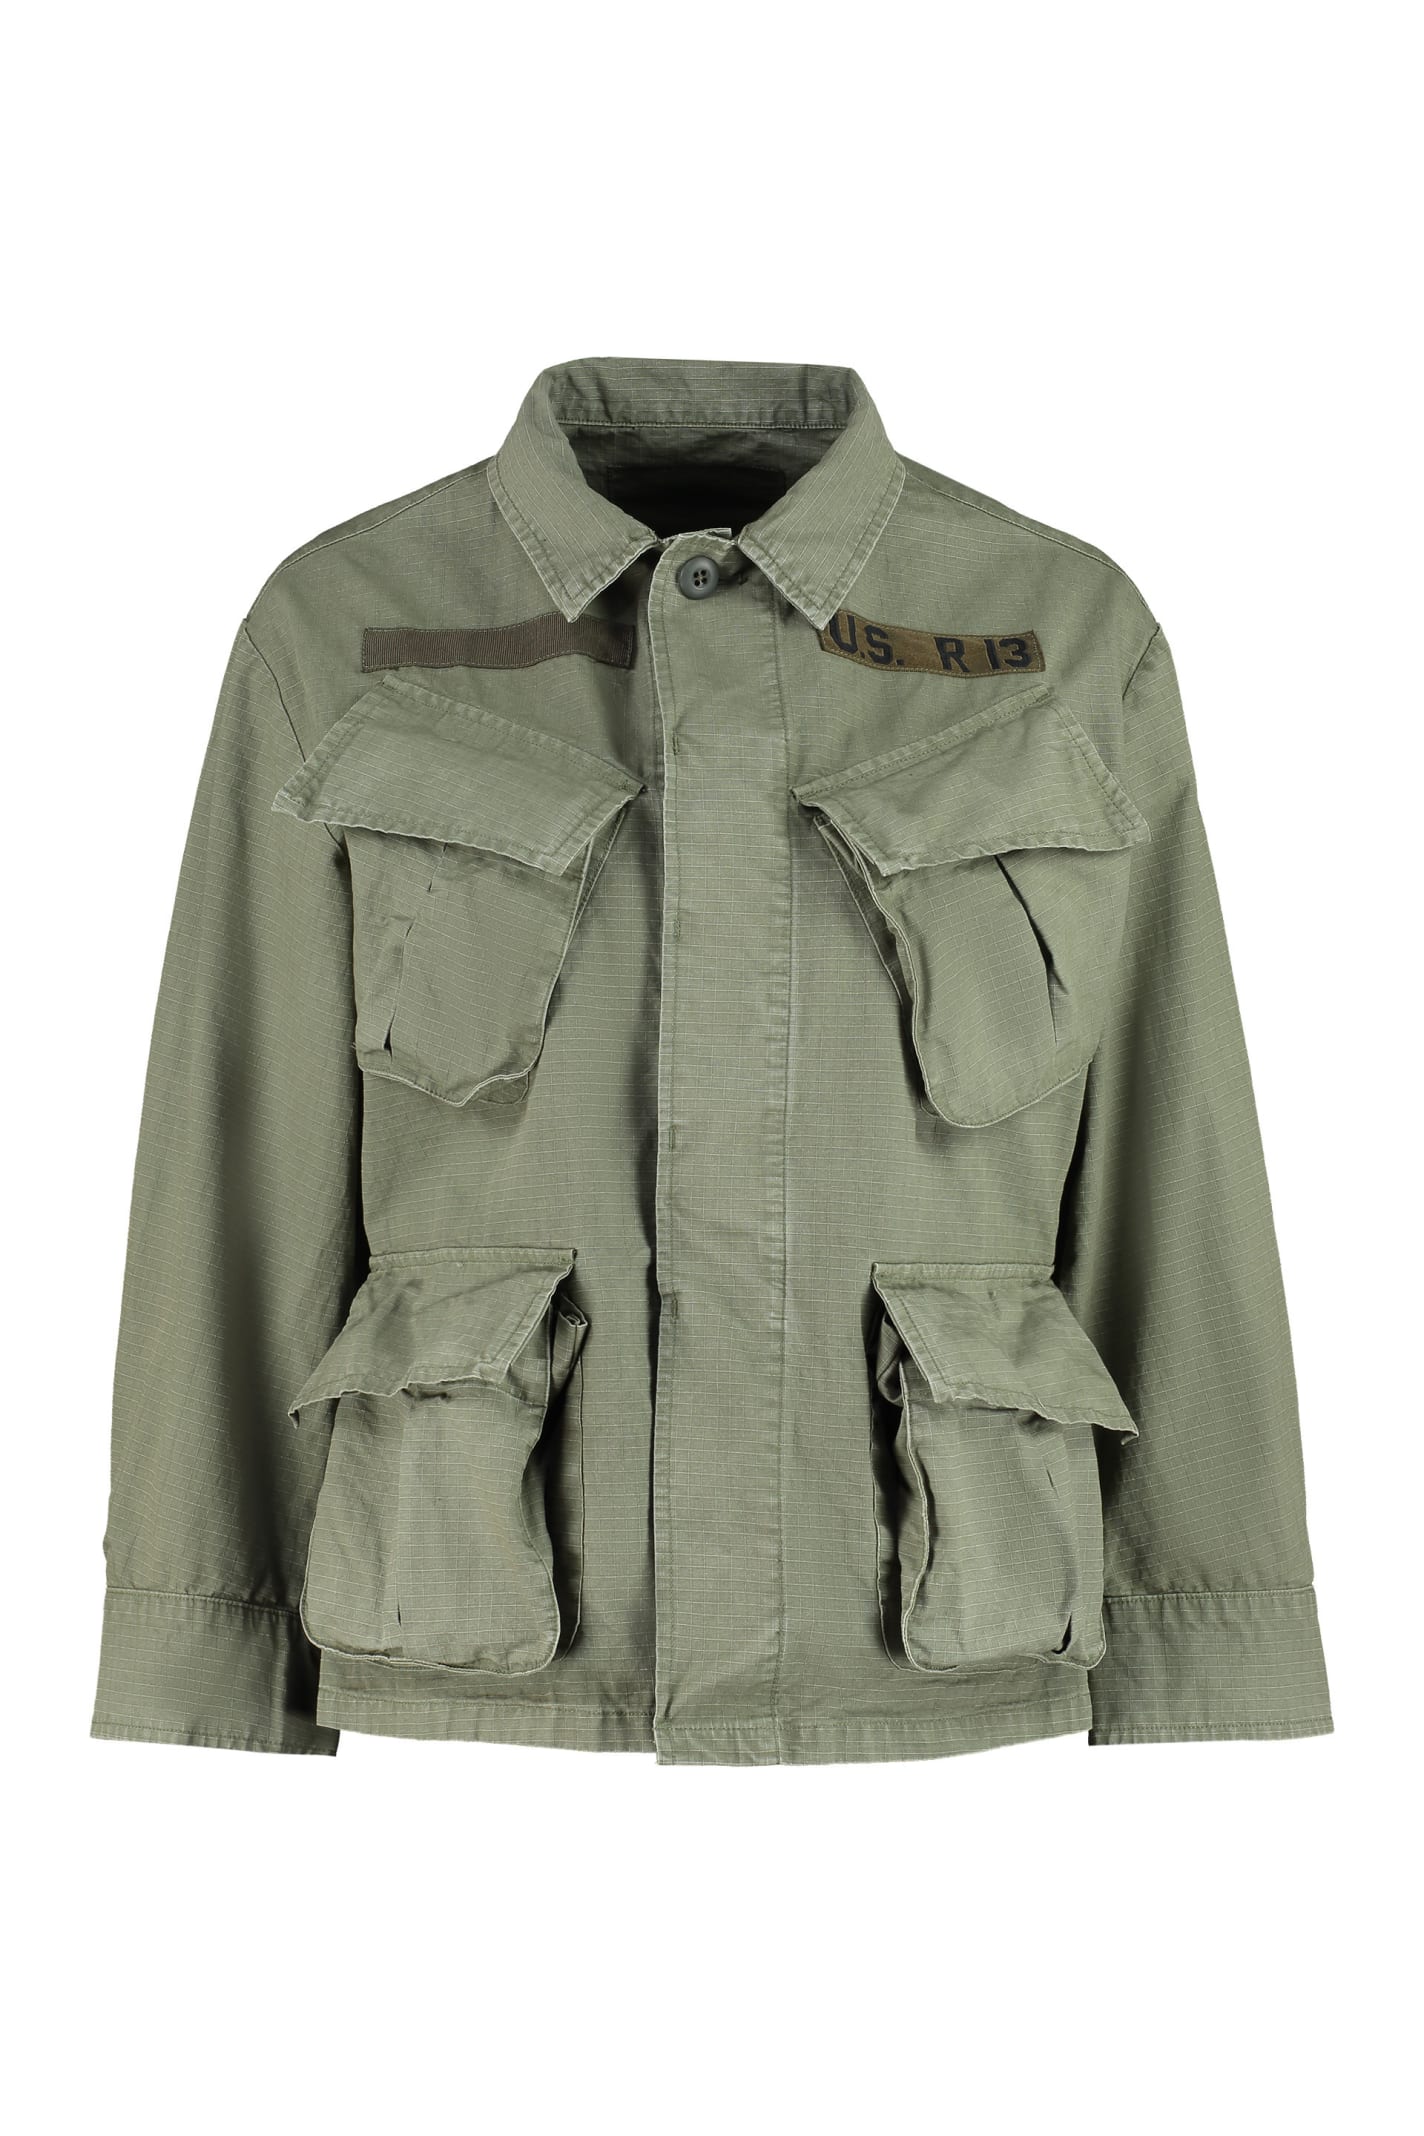 R13 Multi-pocket Cotton Jacket